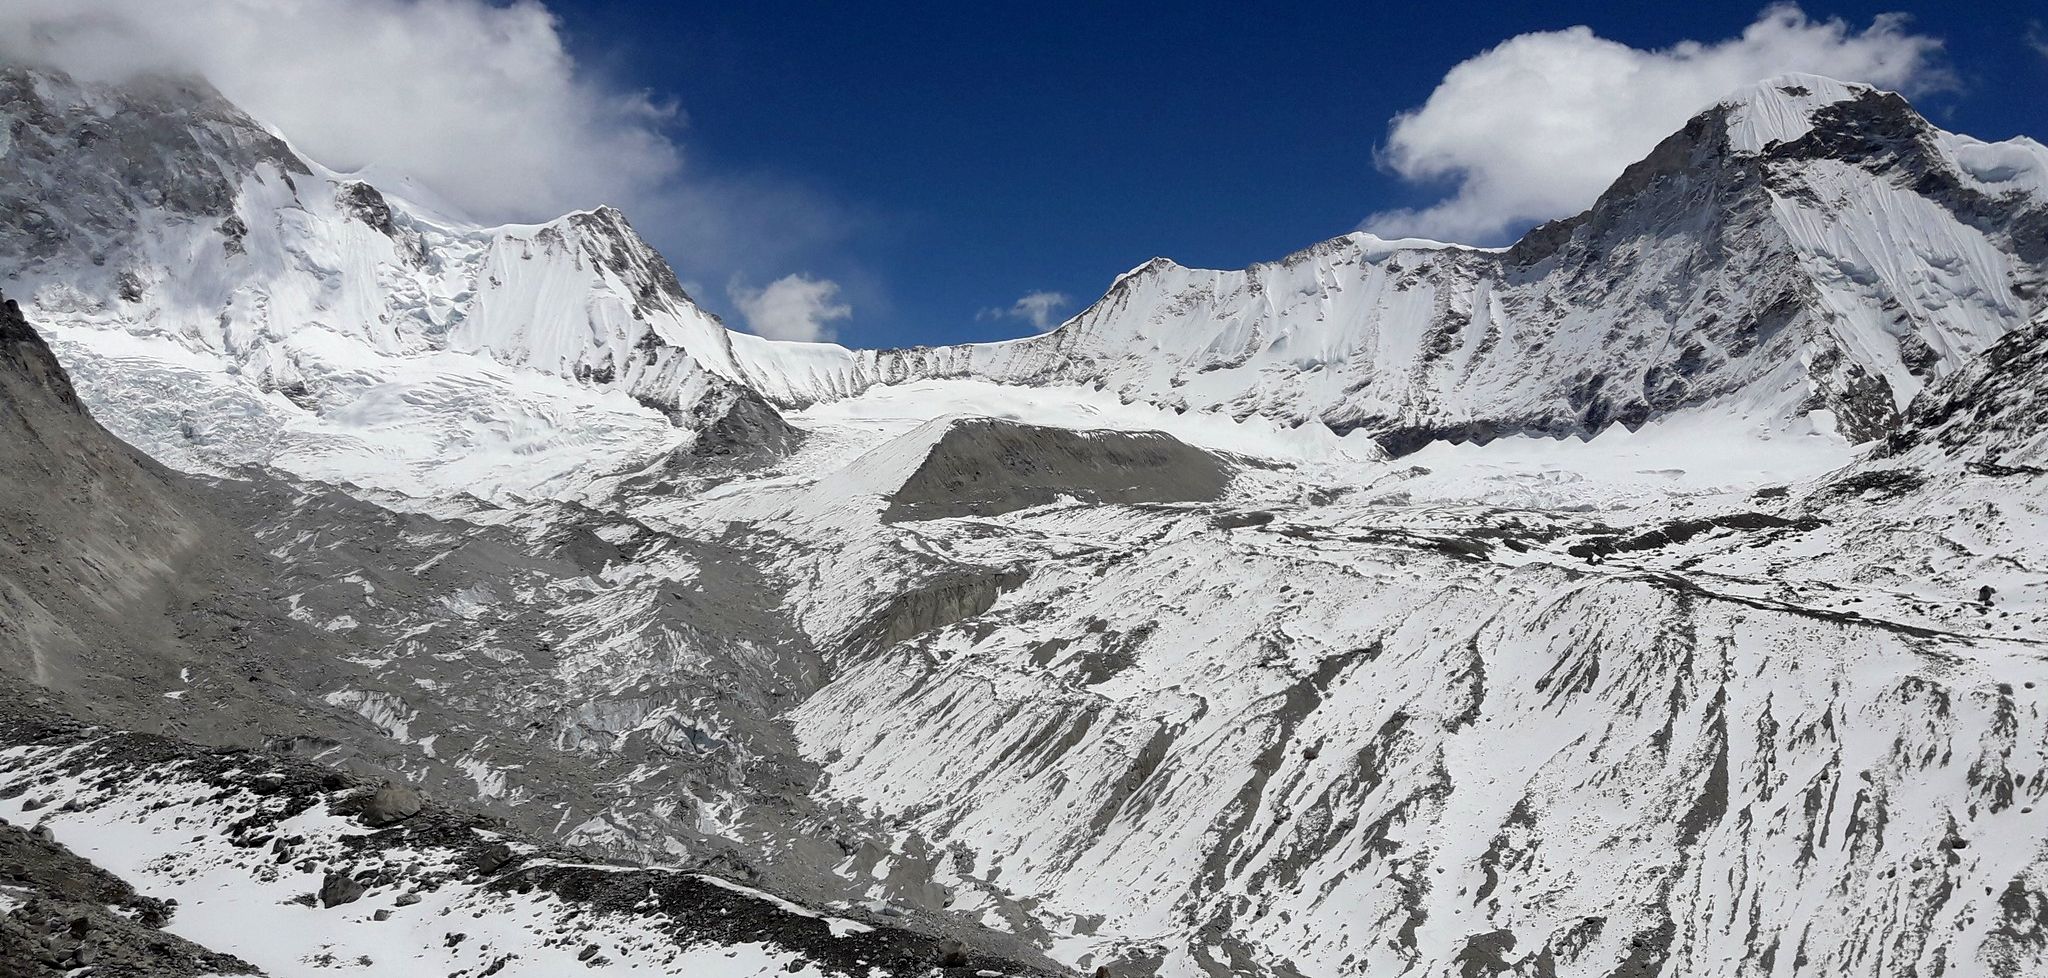 West Col and Chonku Chuli ( Pyramid Peak )